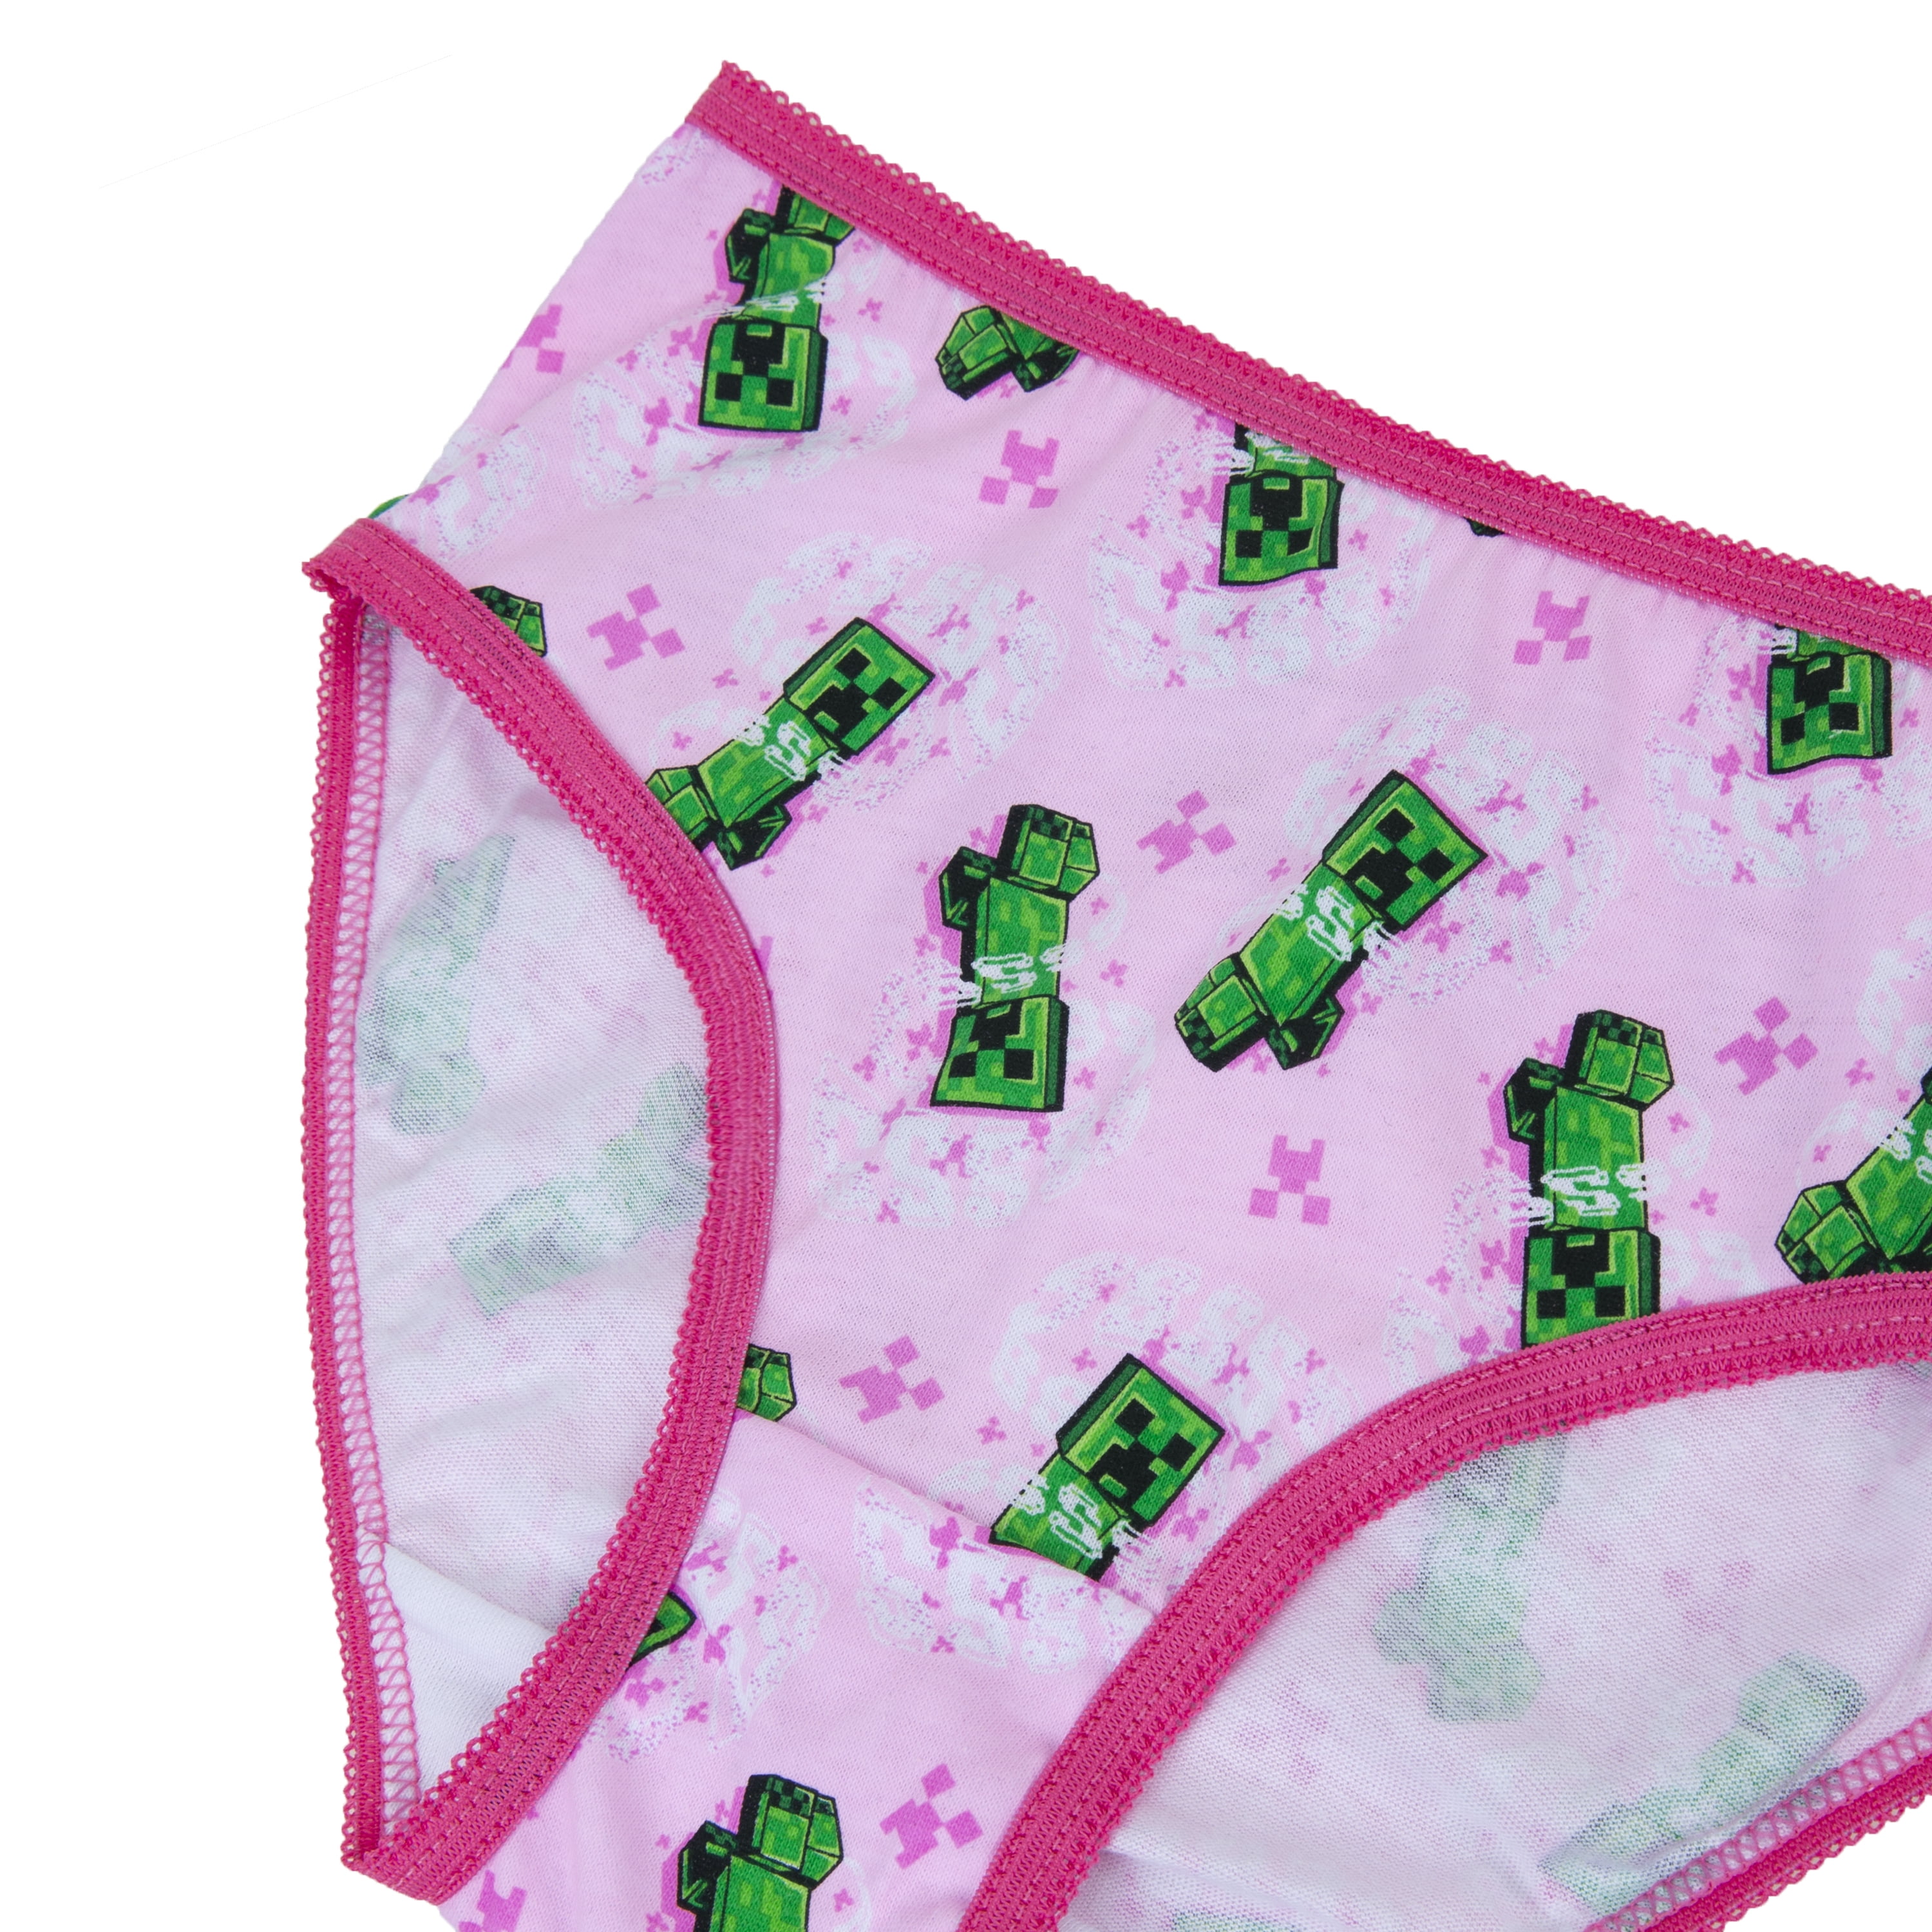 Animal Crossing Little Girls Underwear, 7 Pack, Sizes 6-8